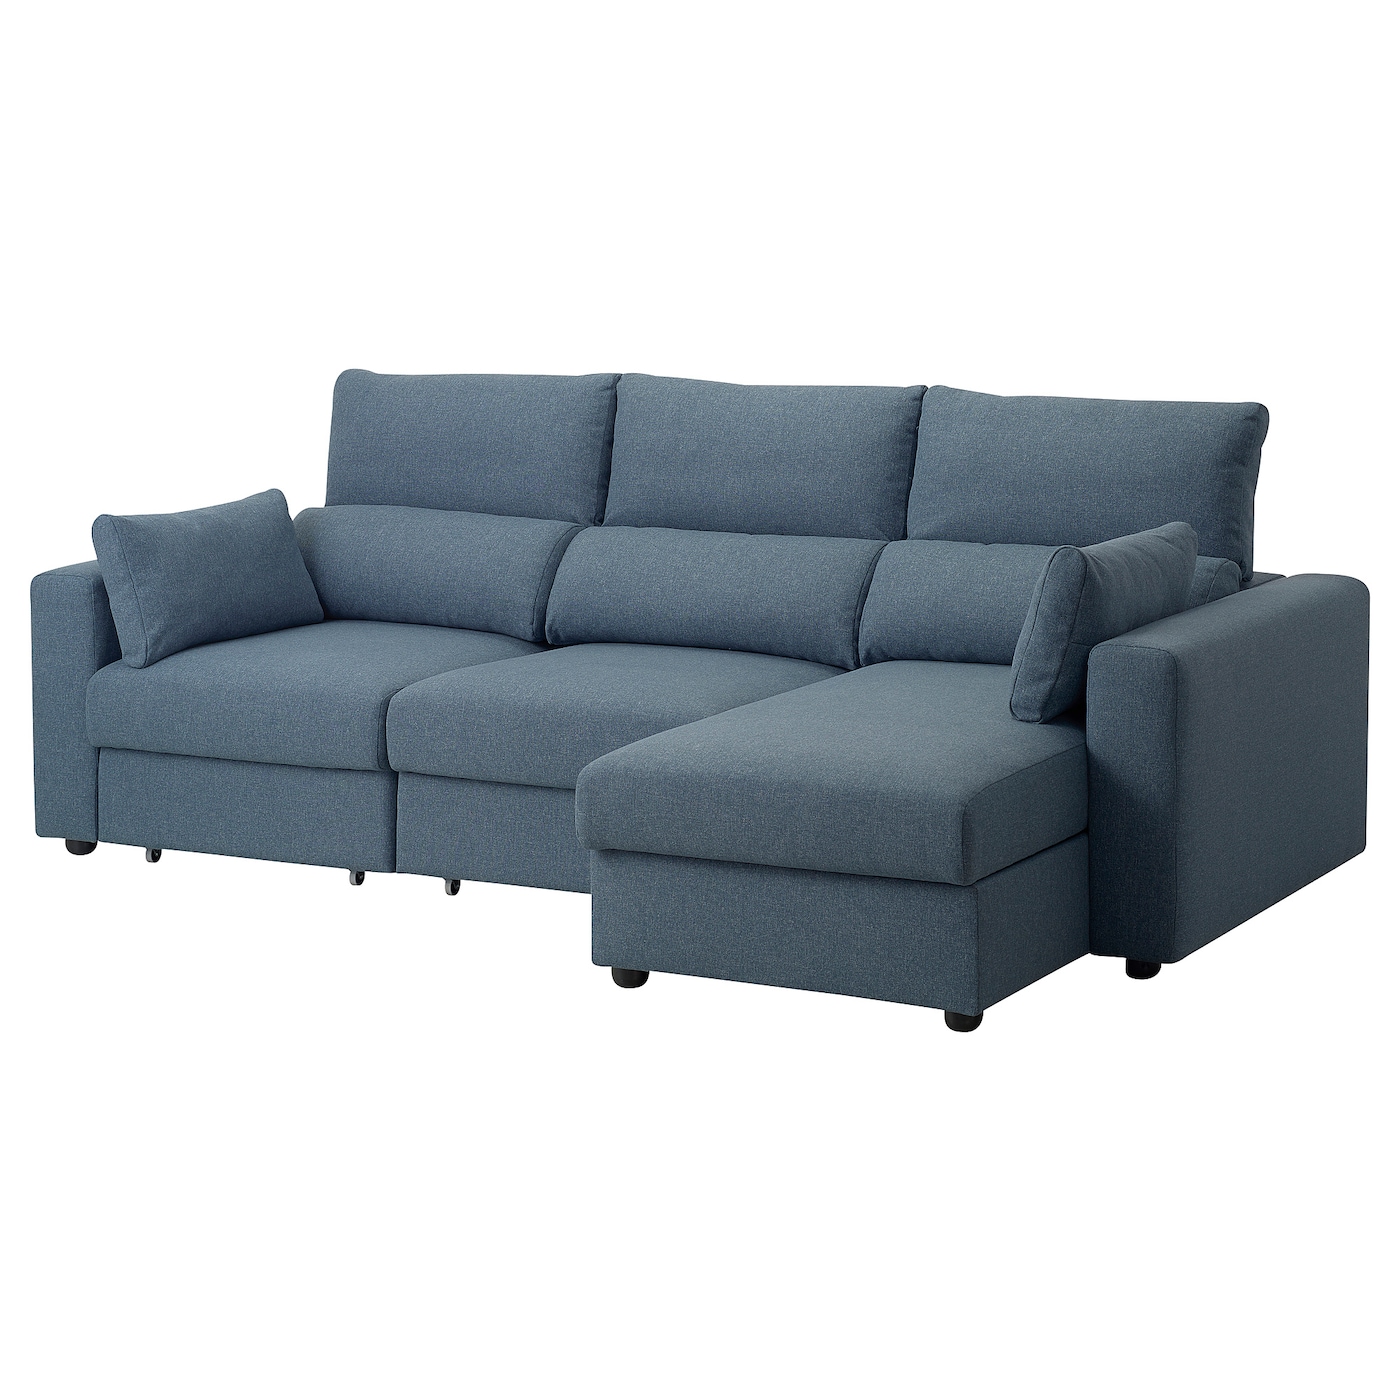 3-местный диван с шезлонгом - IKEA ESKILSTUNA,  100x162x268см, синий, ЭСКИЛЬСТУНА ИКЕА